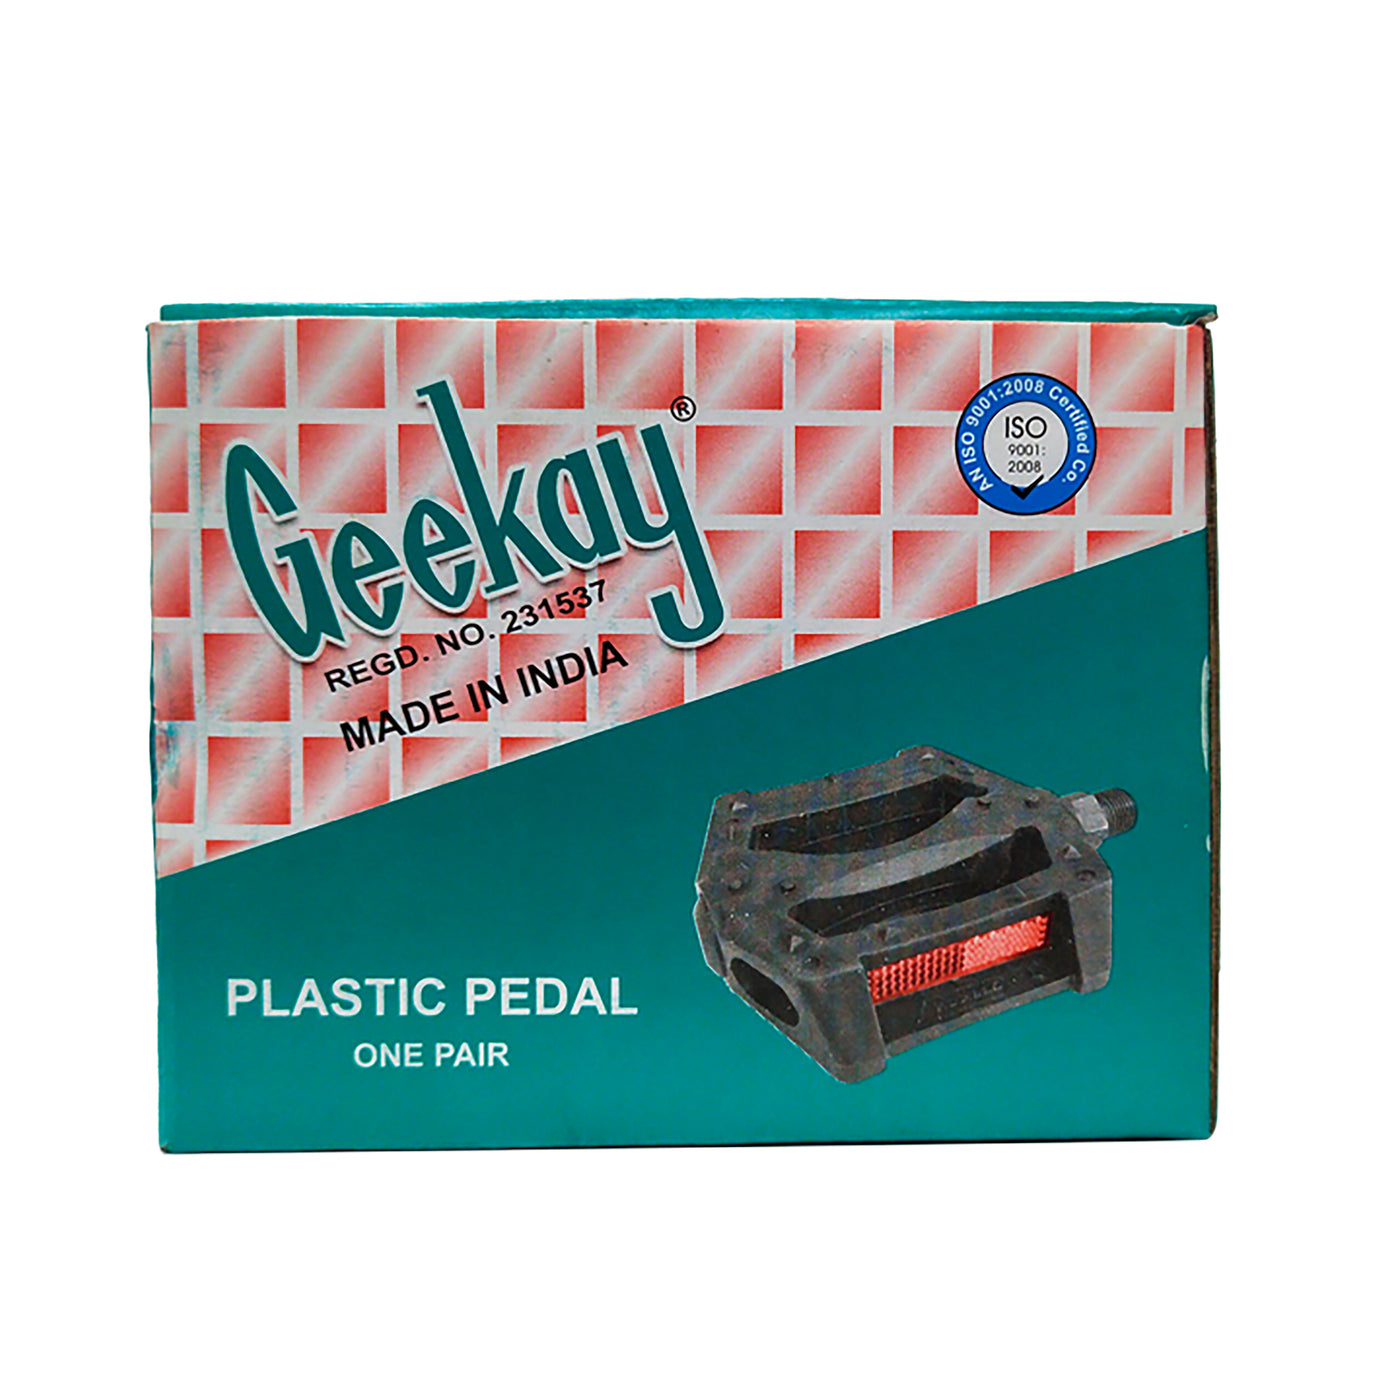 Geekay Plastic Pedals